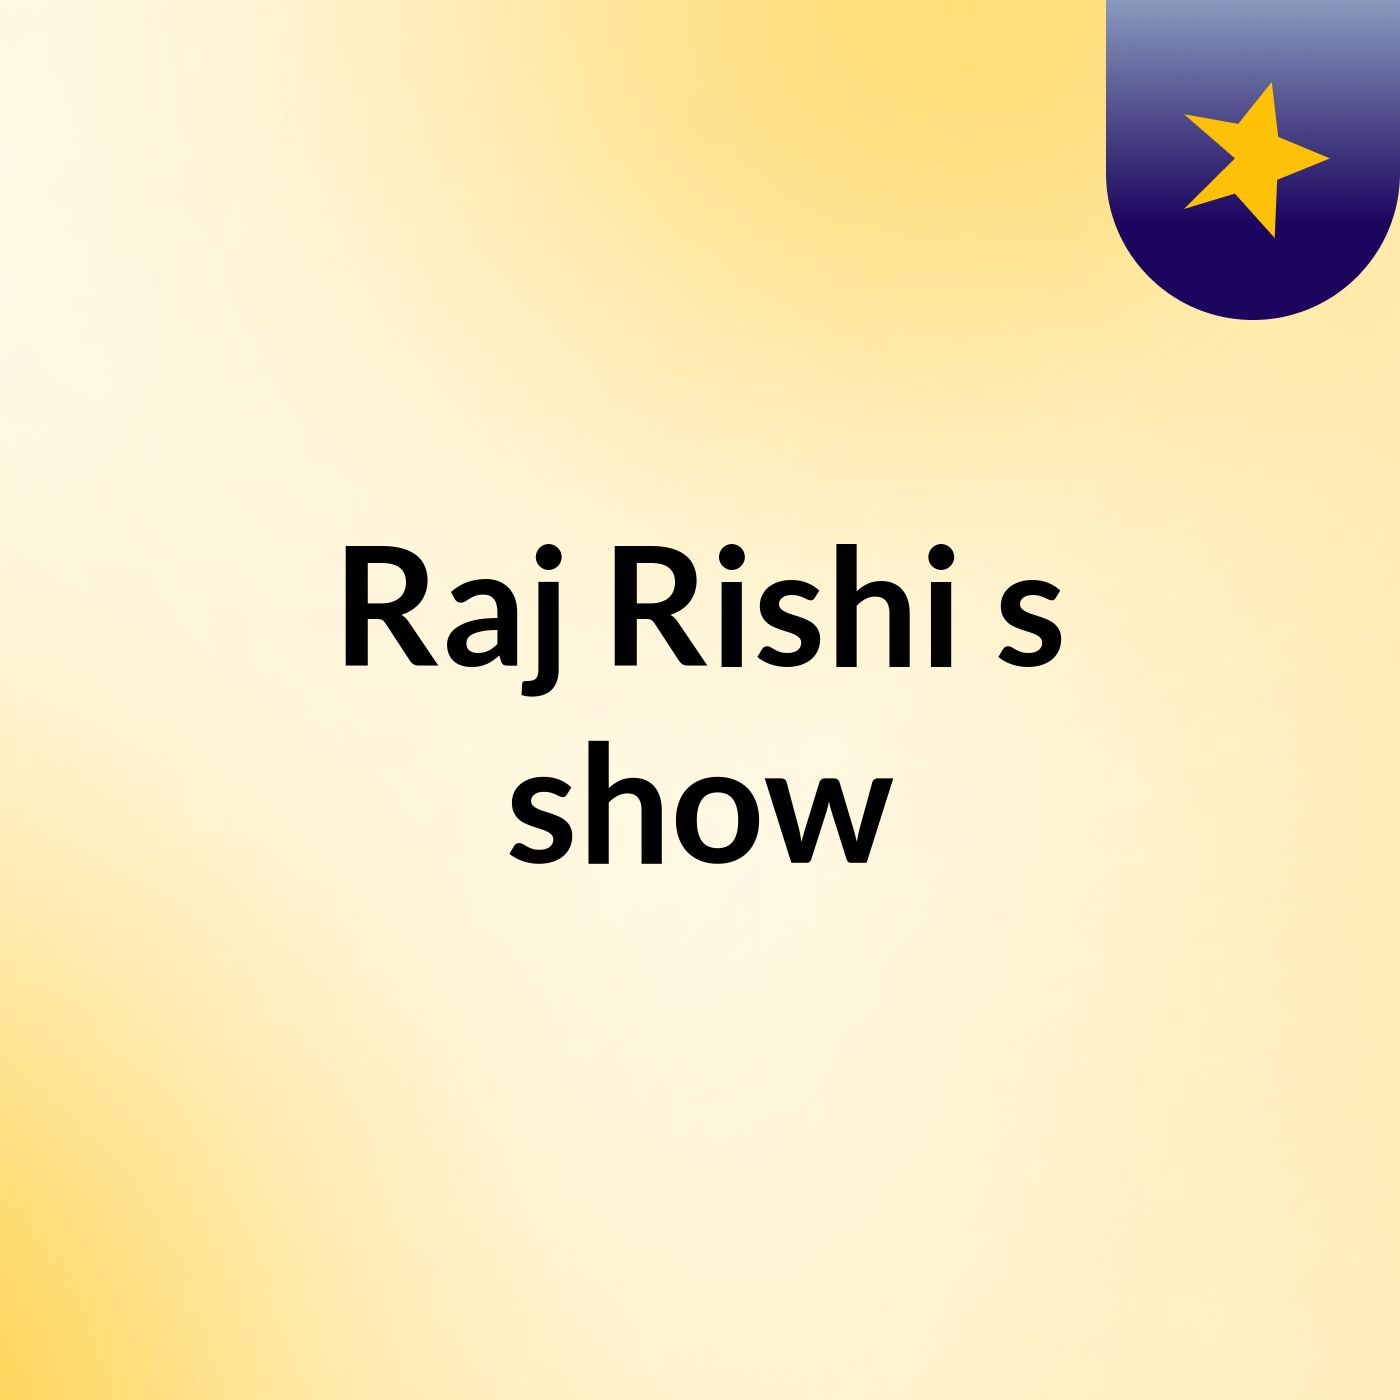 Raj Rishi's show